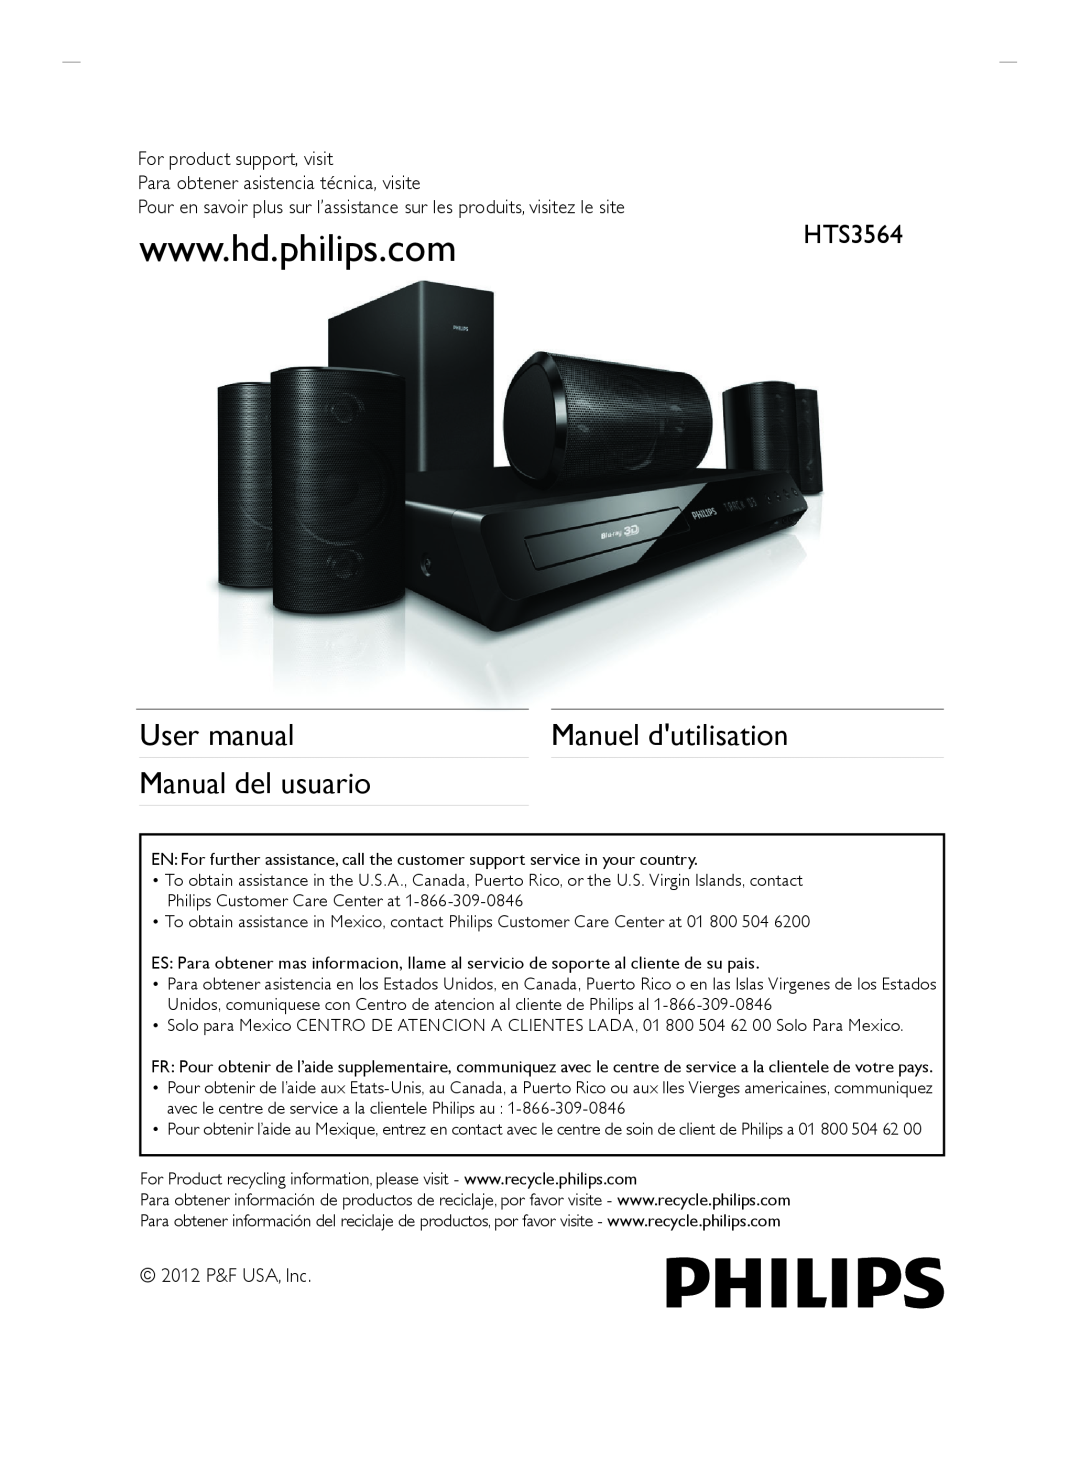 Philips HTS3564 manuel dutilisation User manual, Manuel dutilisation, Manual del usuario 